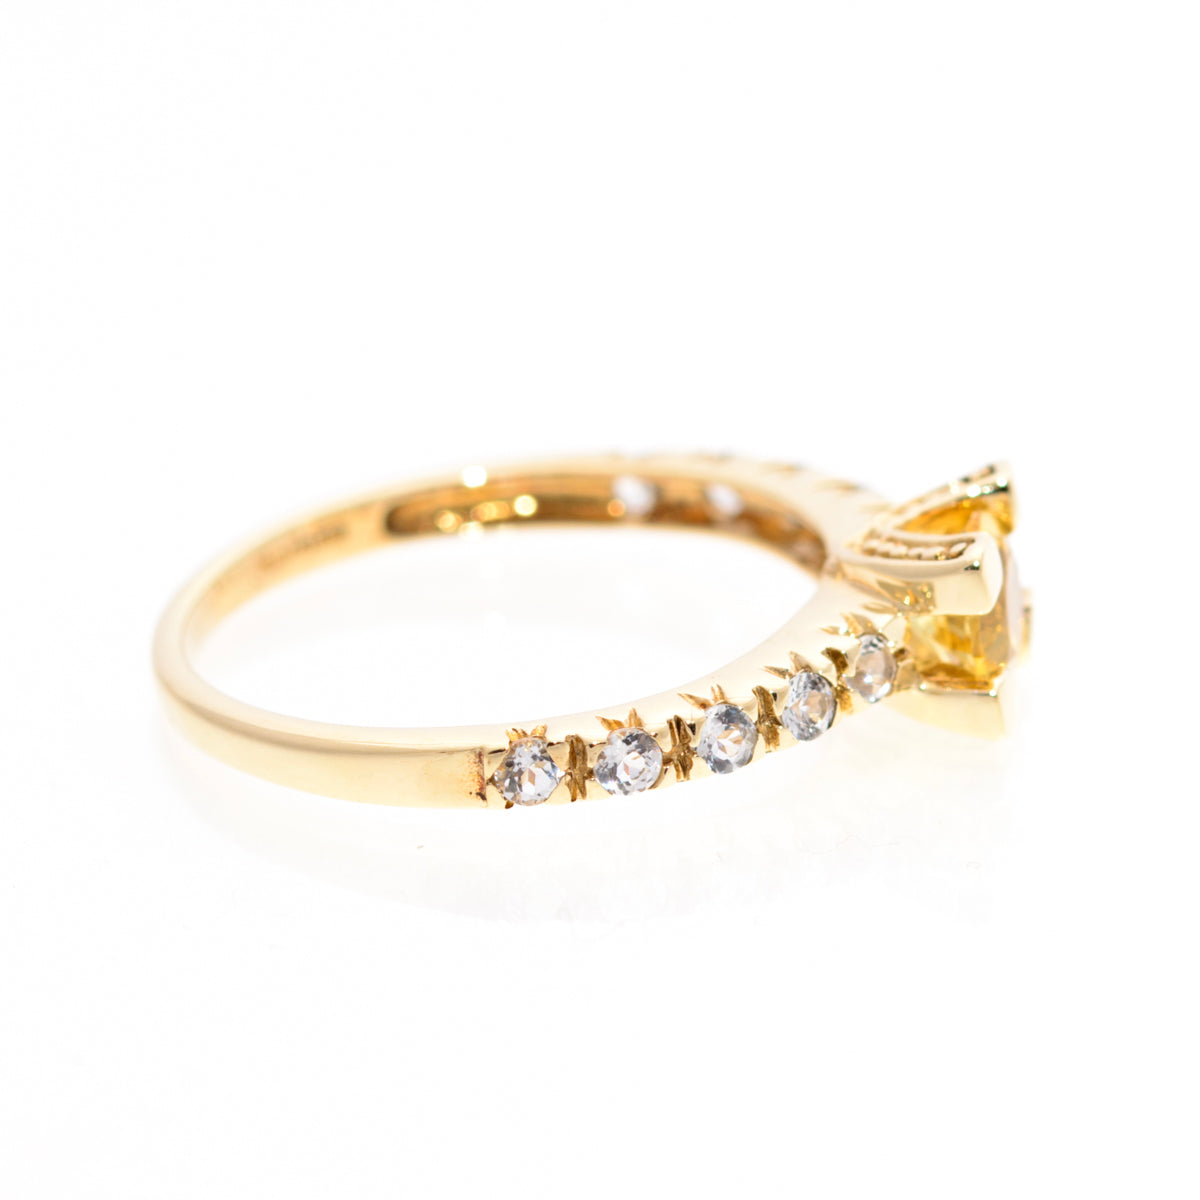 Golden Heliodor Gemstone Ring In 9ct Gold With White Topaz Shoulder Decoration (A1445)